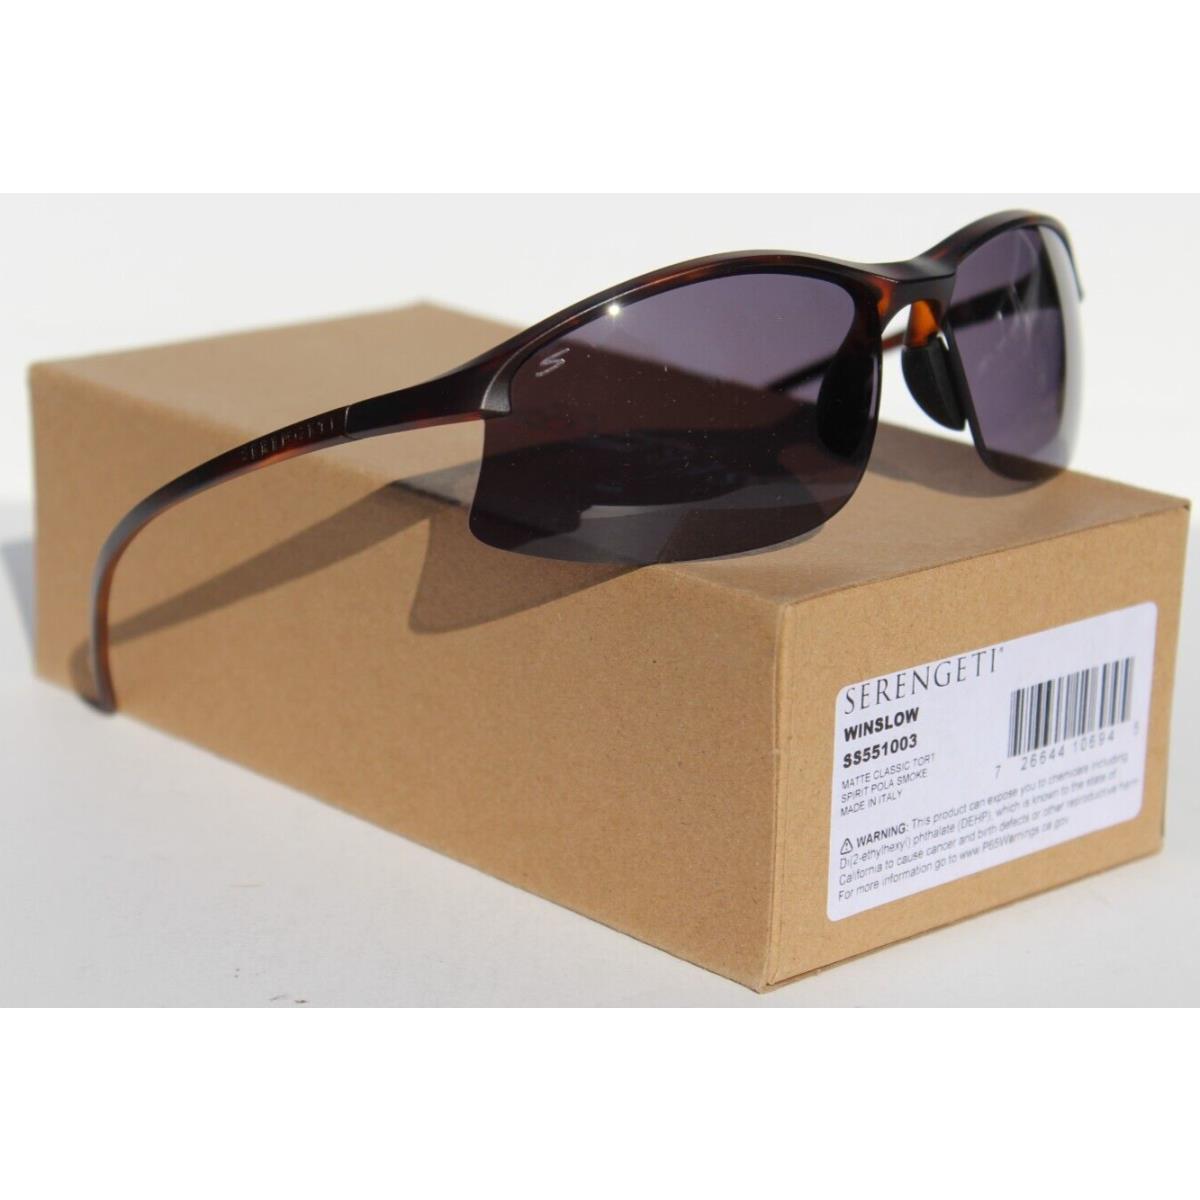 Serengeti Winslow Polarized Sunglasses Matte Tortoise/smoke Gray SS551003 Italy